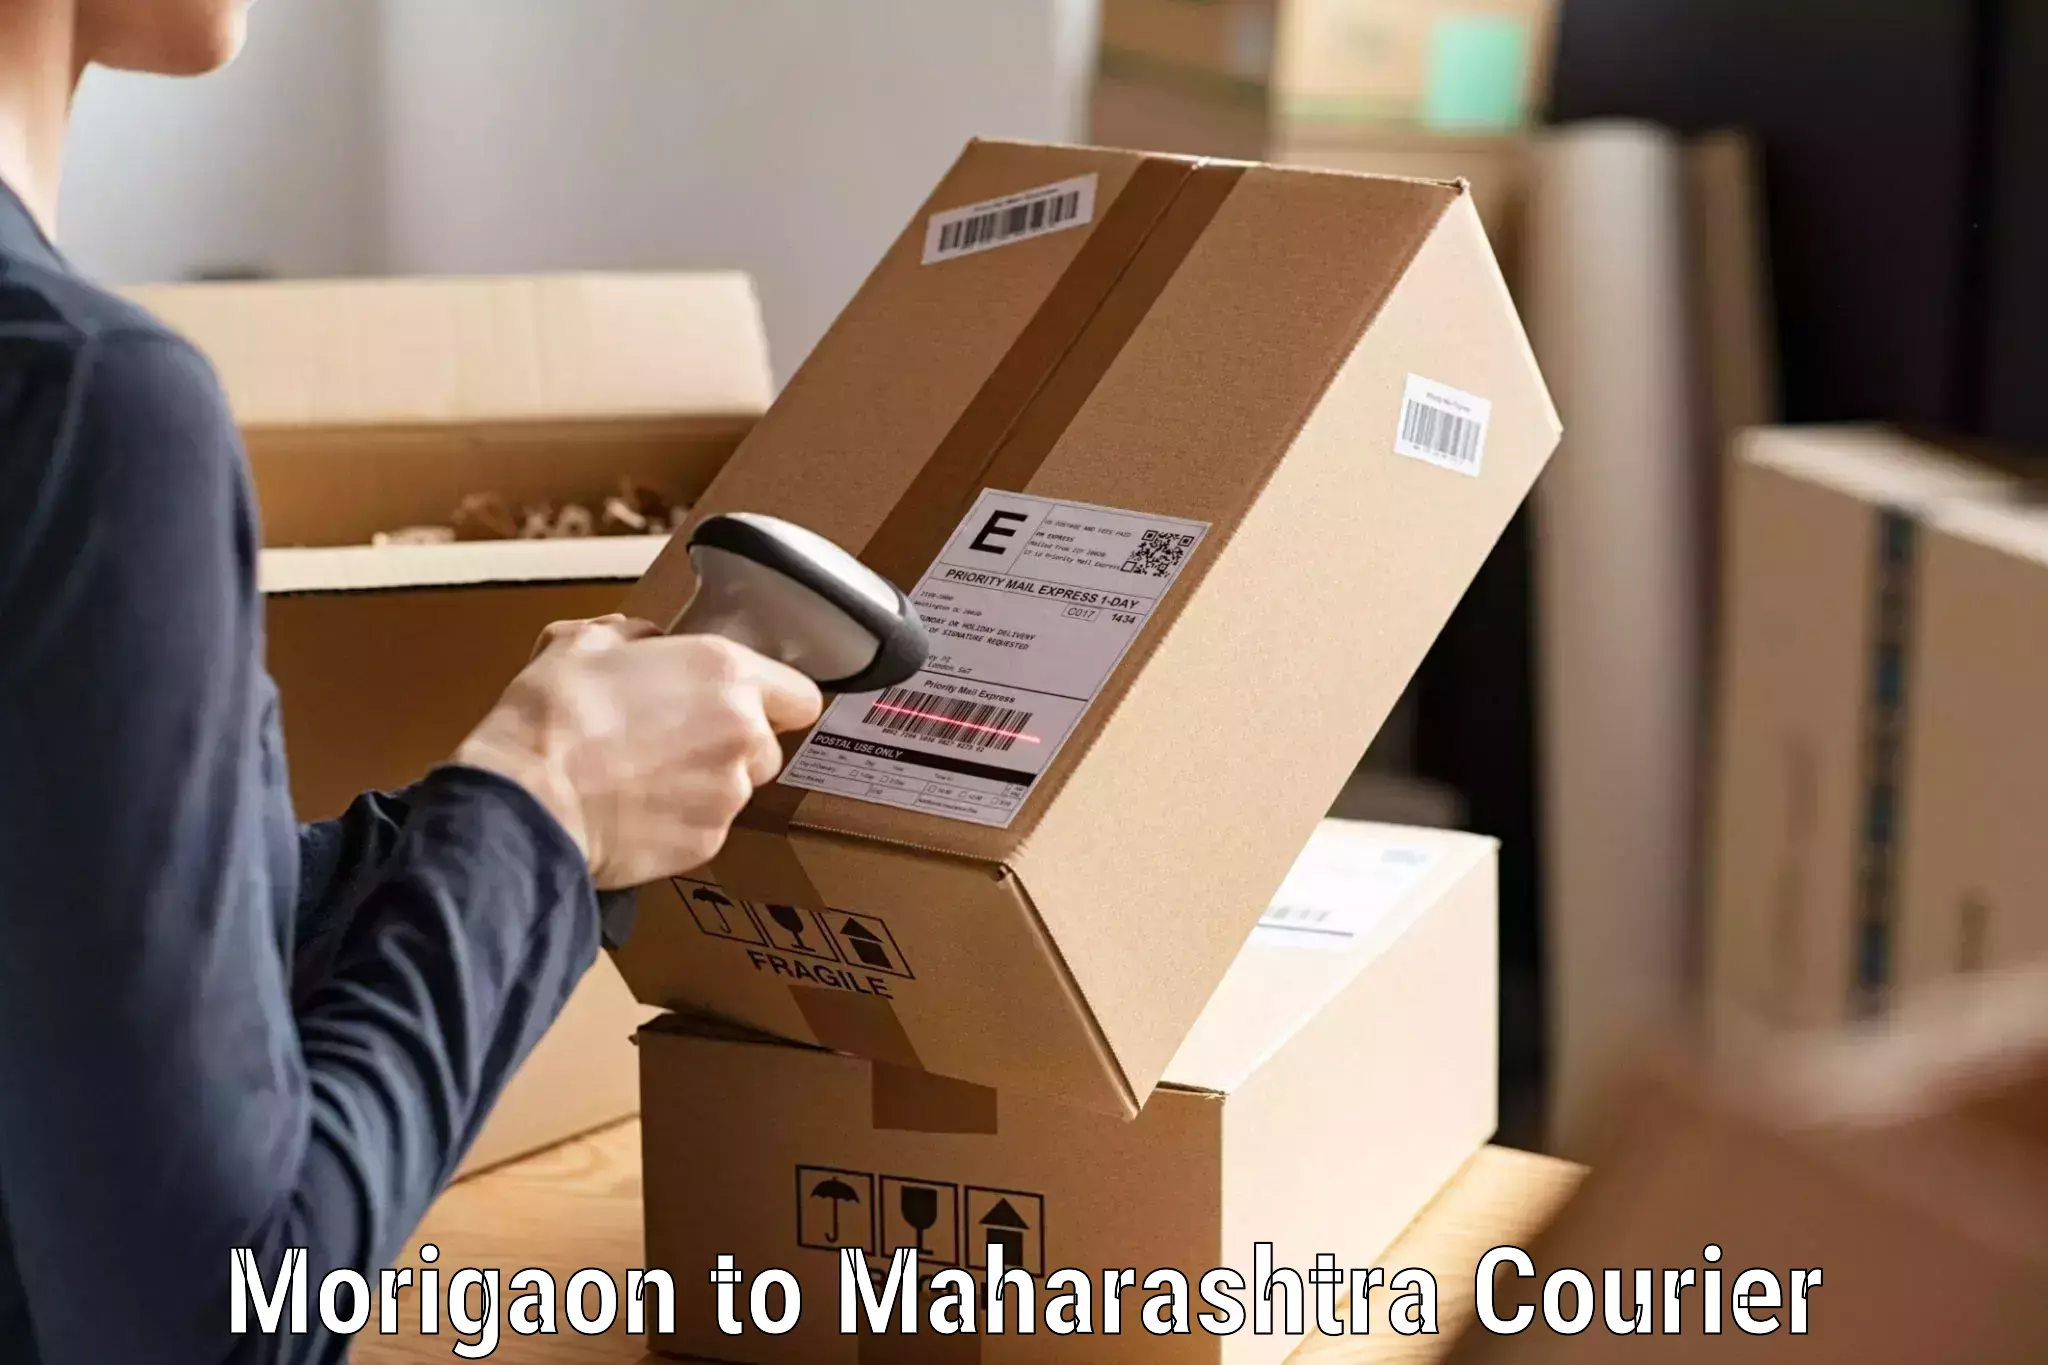 Comprehensive parcel tracking in Morigaon to Maharashtra